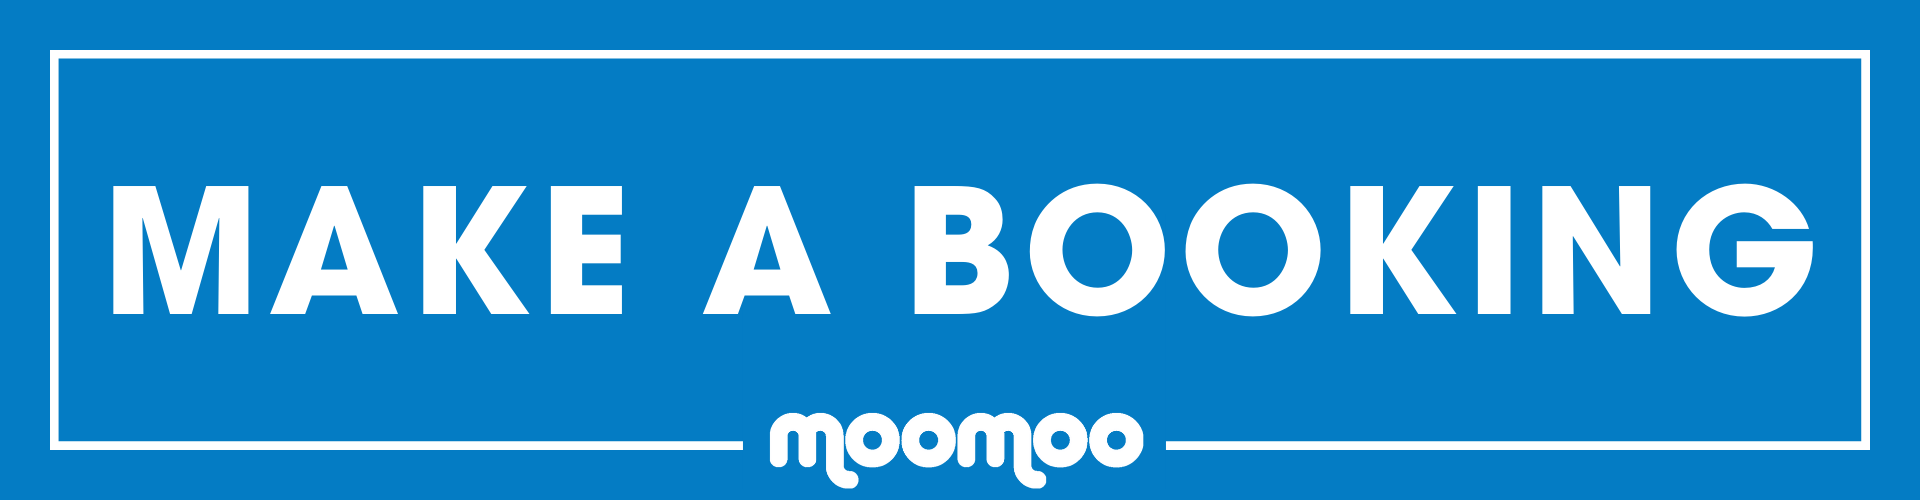 MooMoo Make a Booking